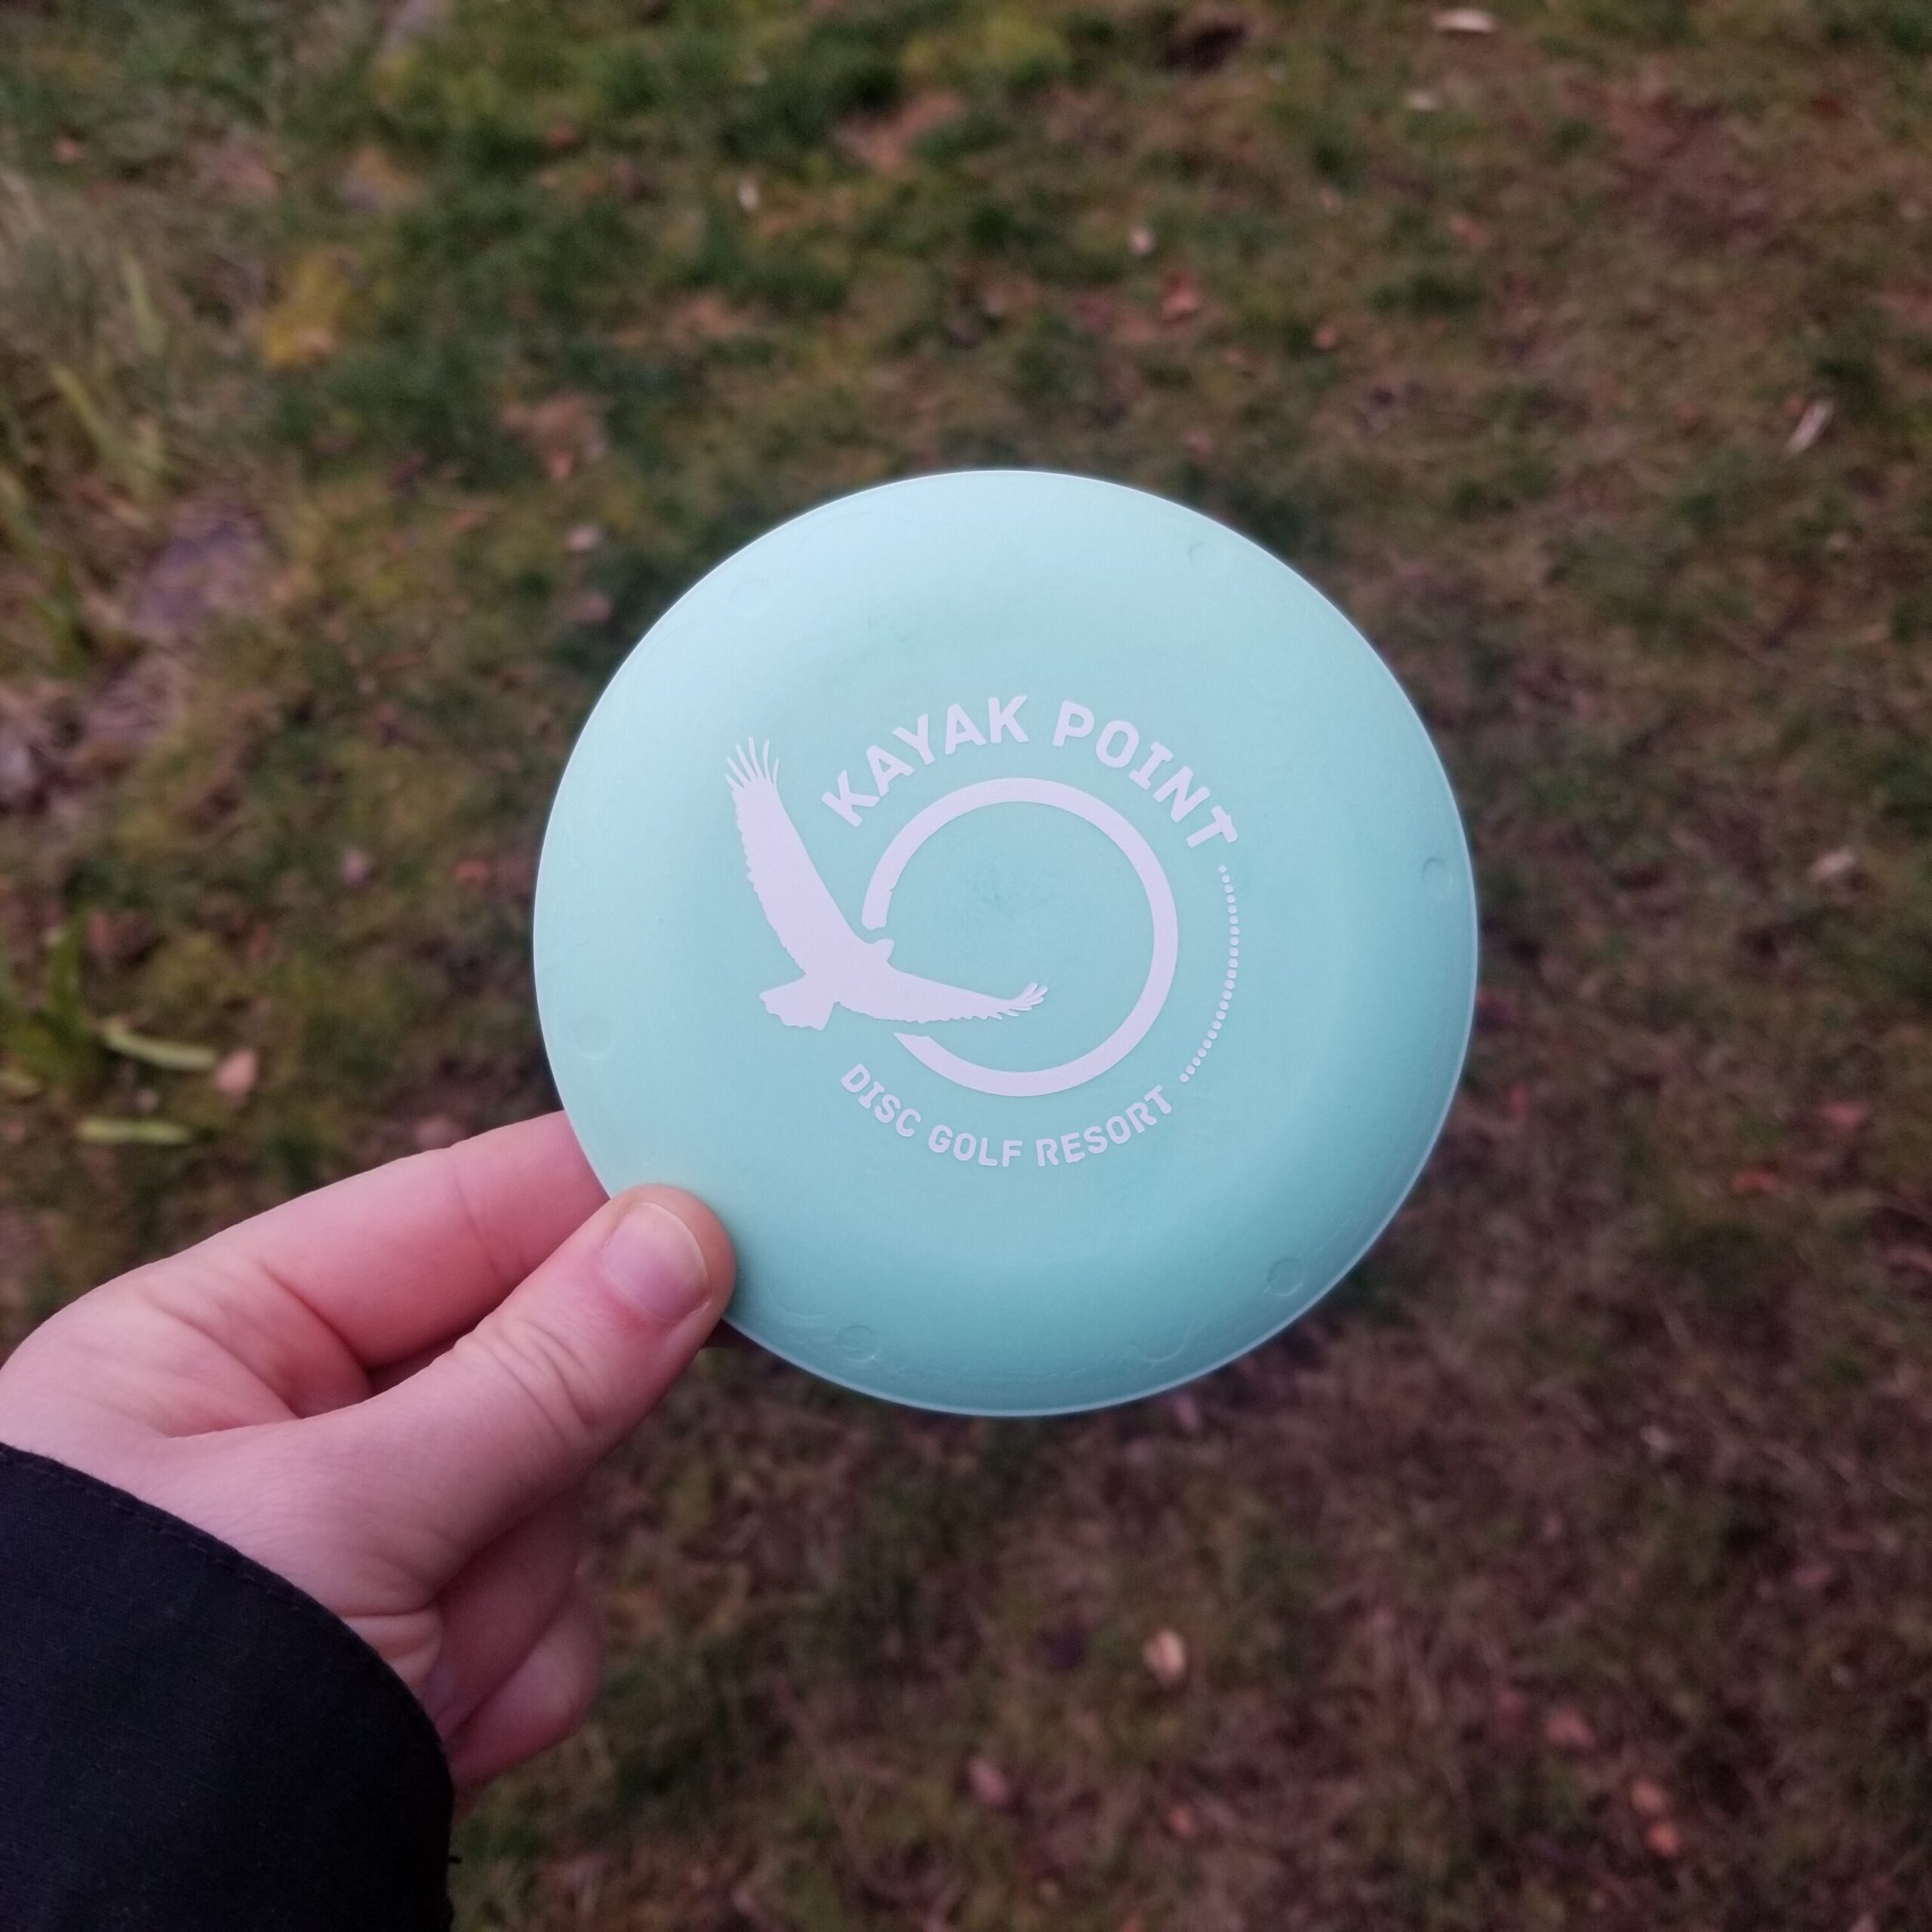 Mini disc with "Kayak Point Disc Golf Resort" logo